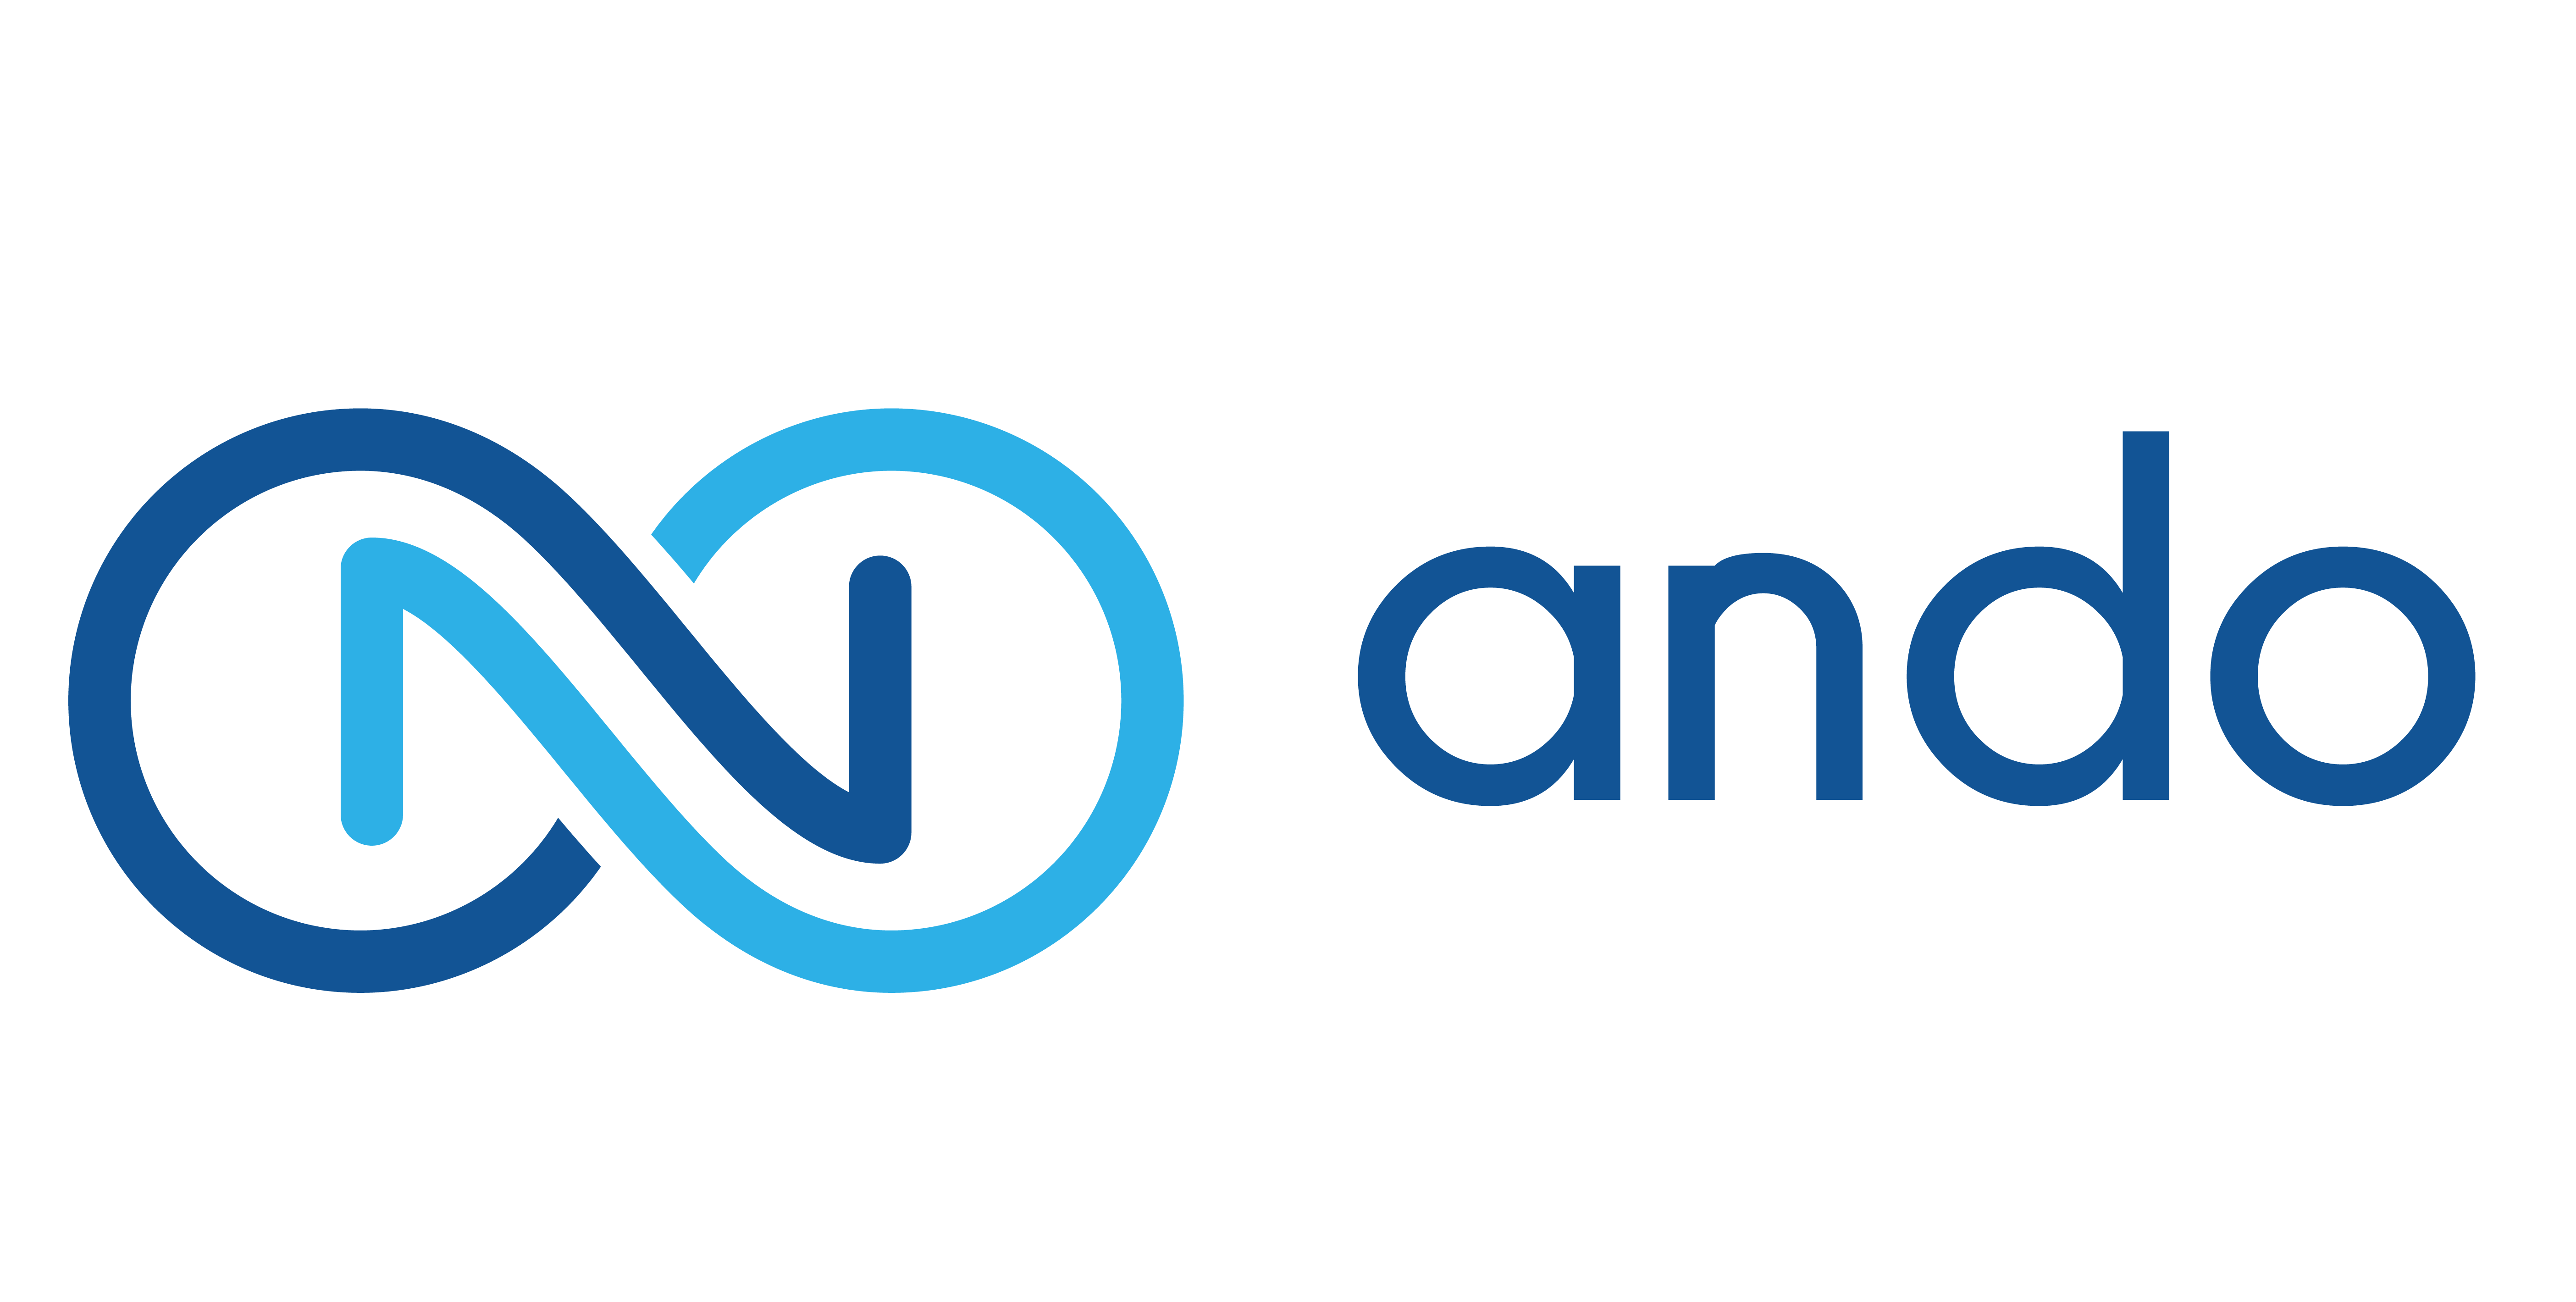 andobio logo